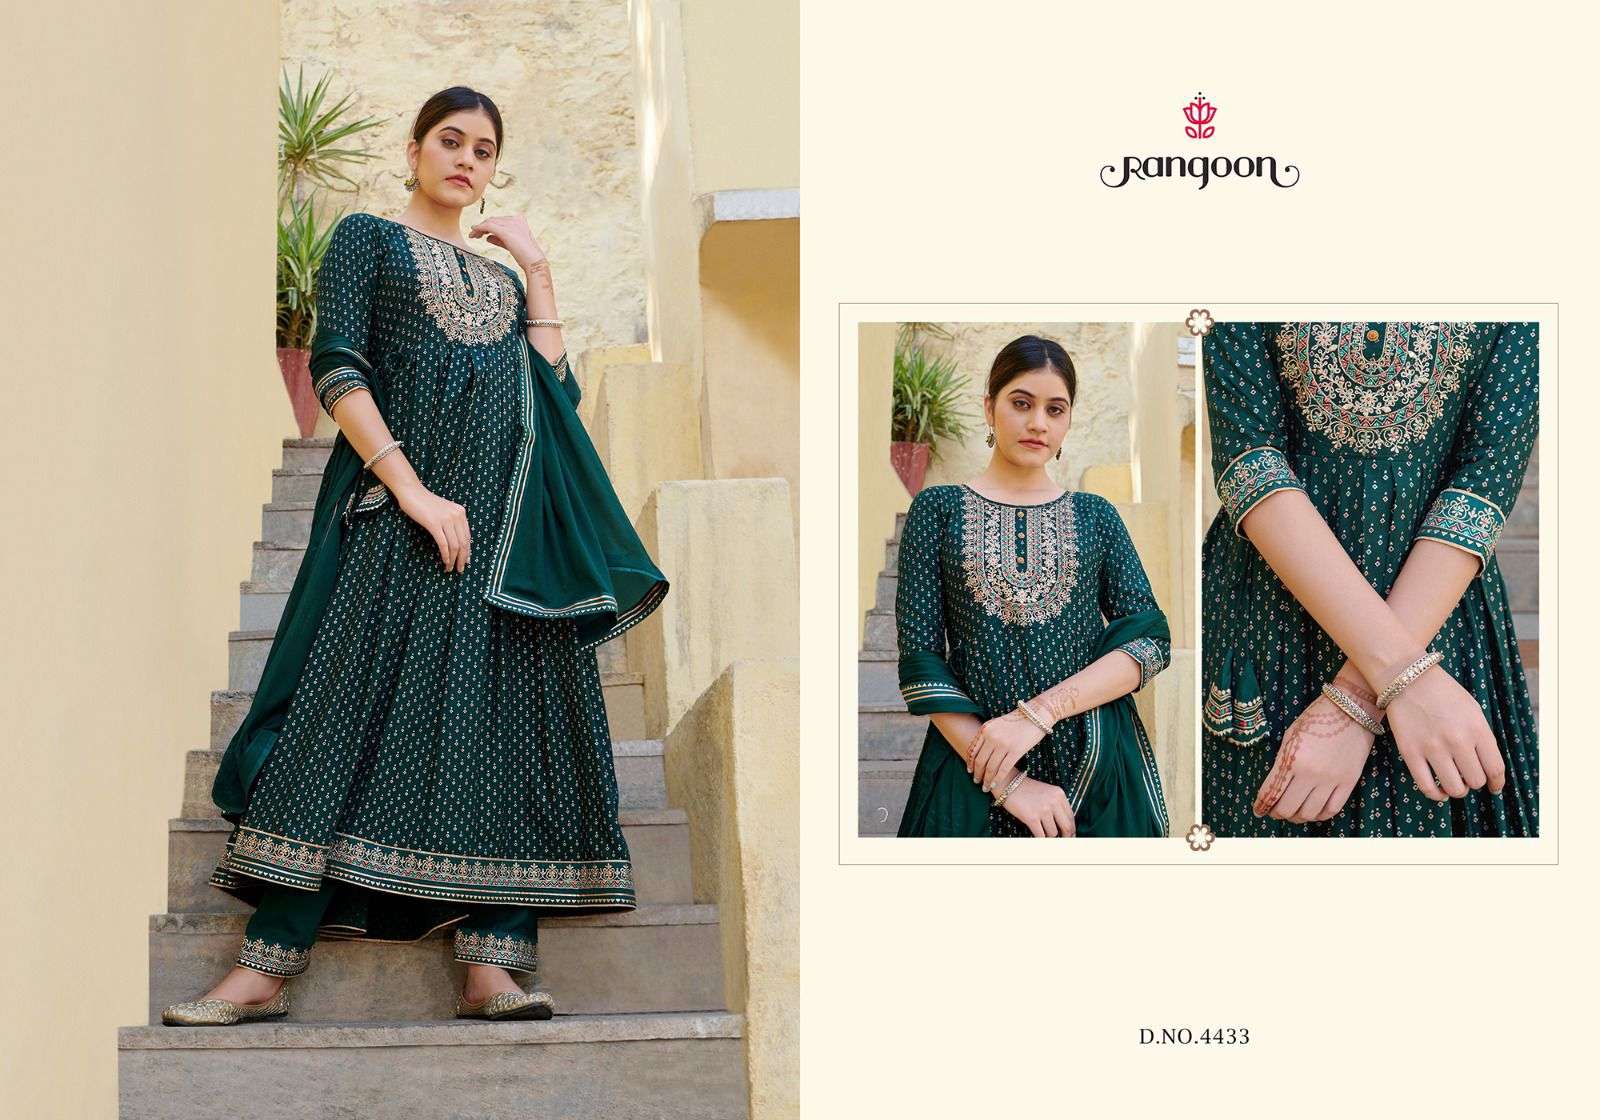 rangoon jilmil 4431-4434 series designer wedding wear pakistani salwar suit wholesaler surat